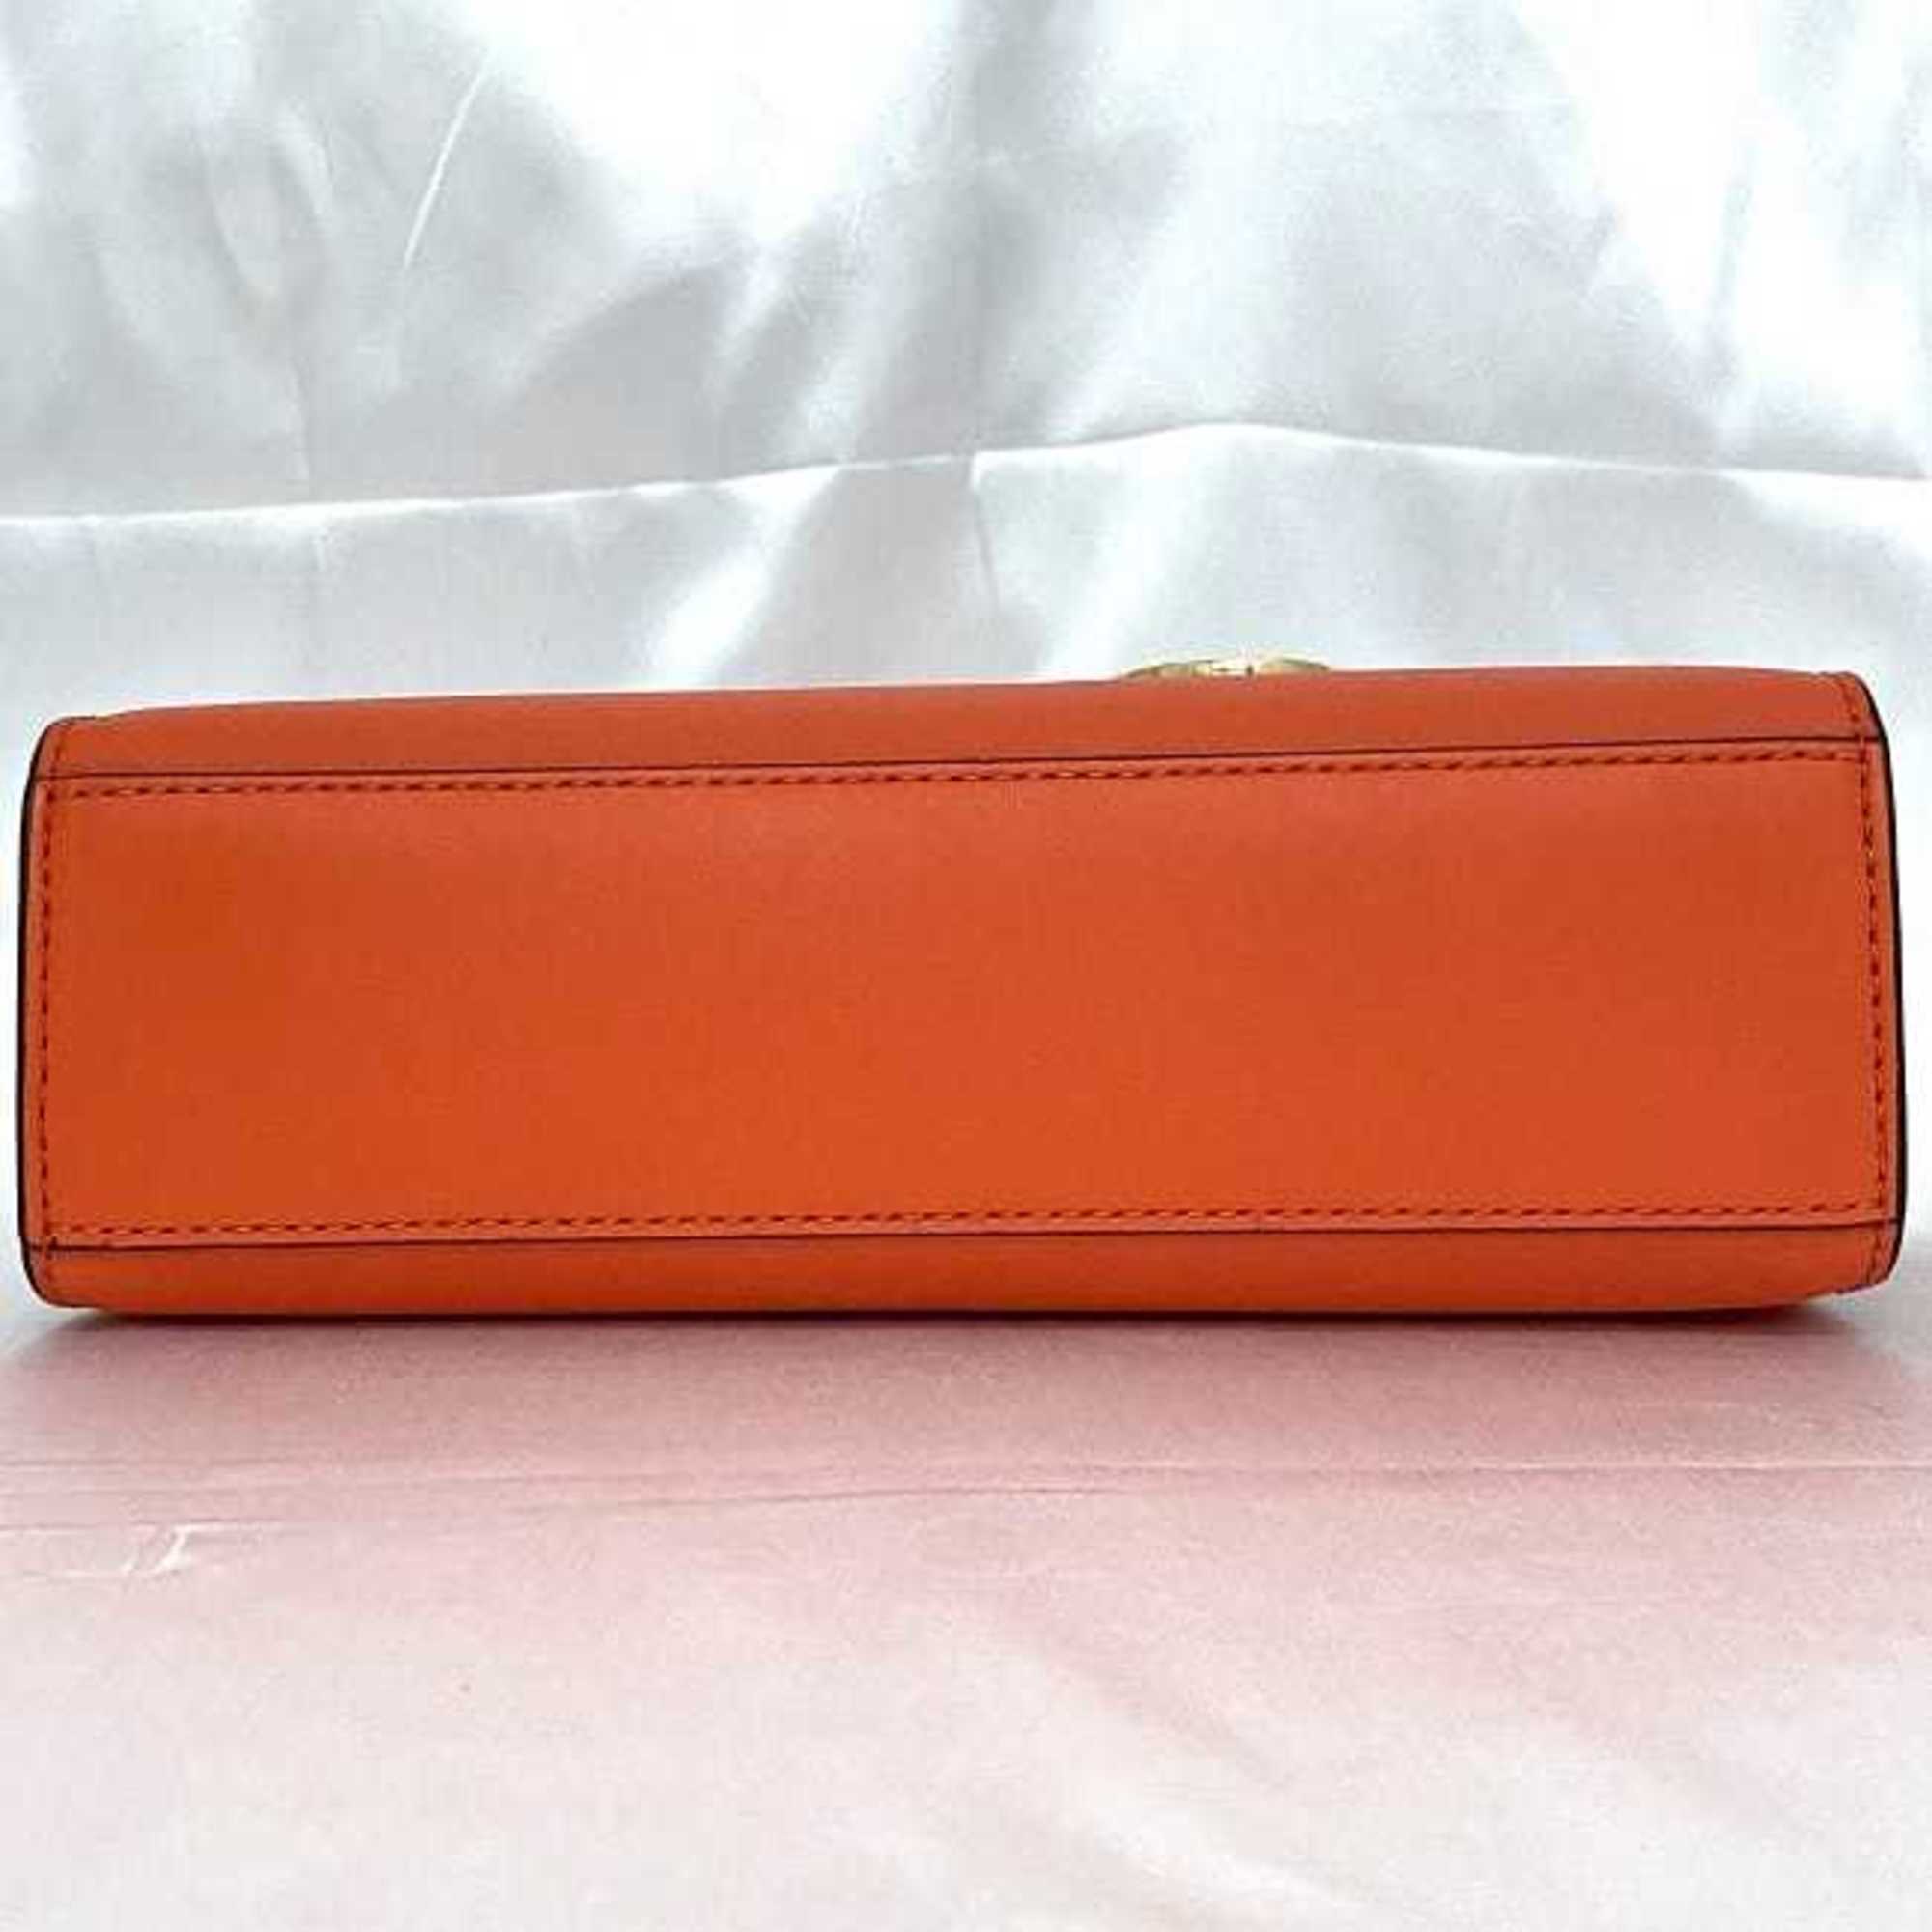 Michael Kors 2way Orange 35S3G6HS5L ec-20069 Leather MICHAEL KORS Charm Handbag Shoulder Bag Women's